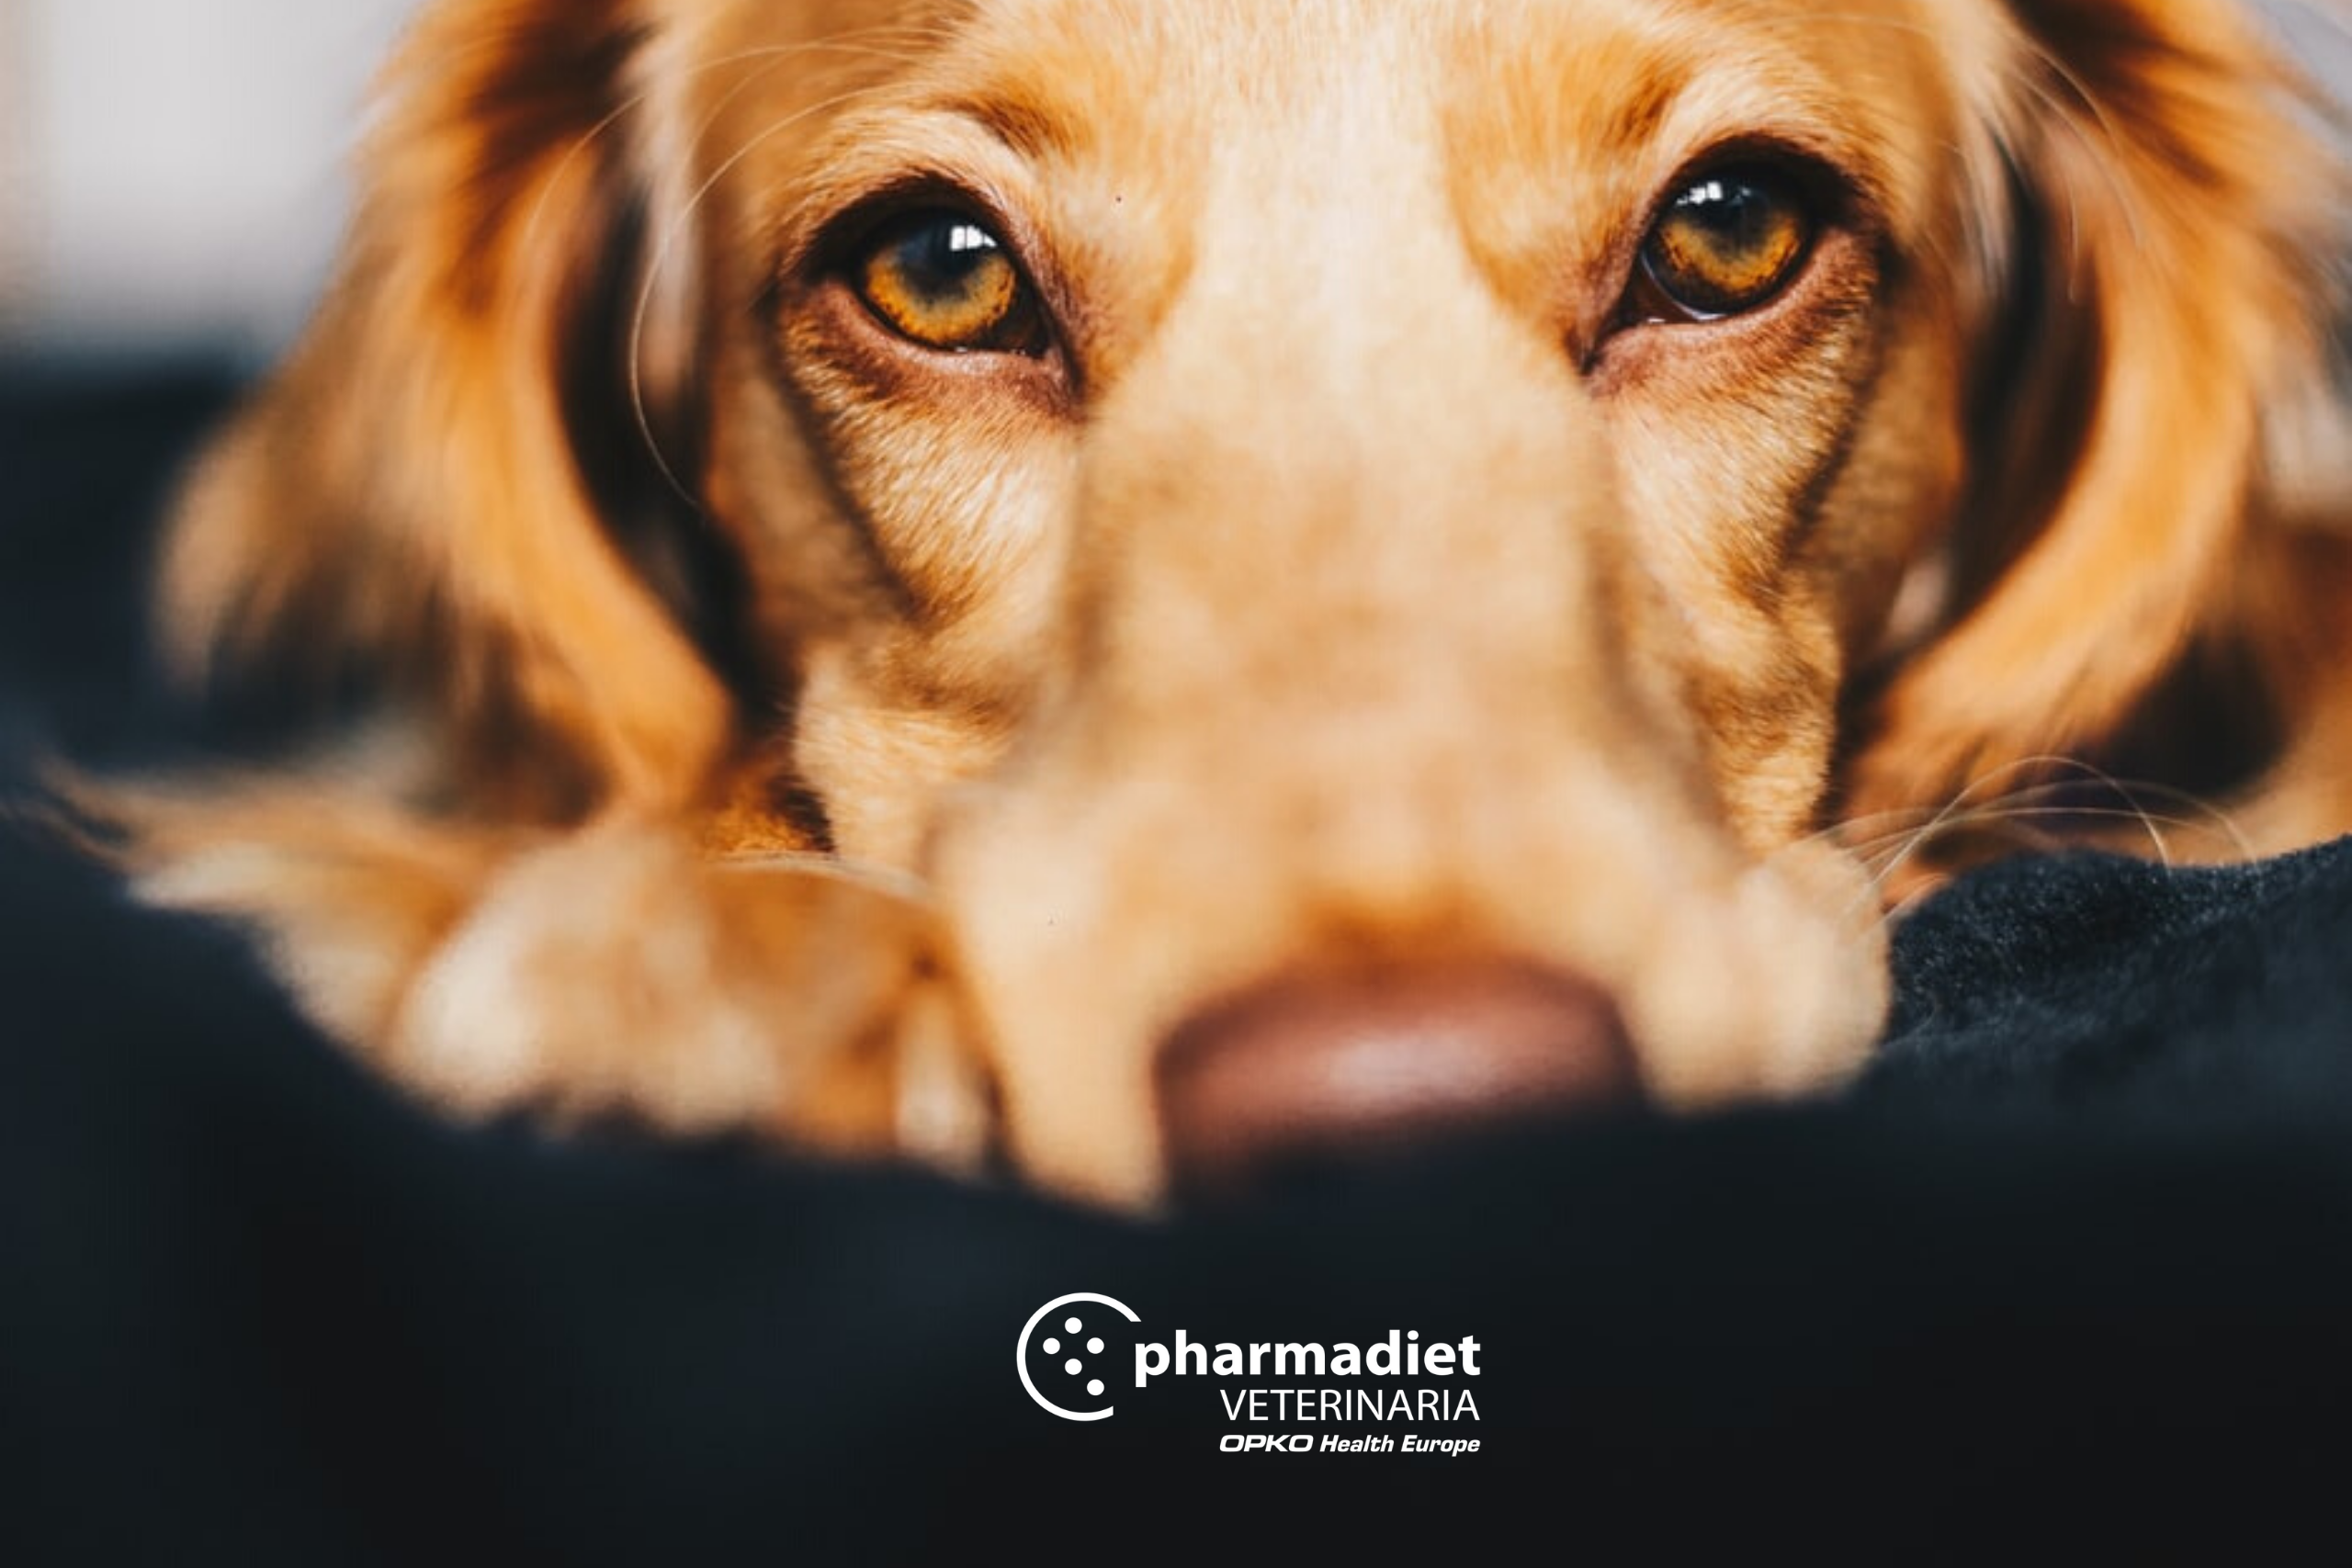 Pharmadiet Veterinaria: 4 tips para dar brillo al pelaje de tu perro